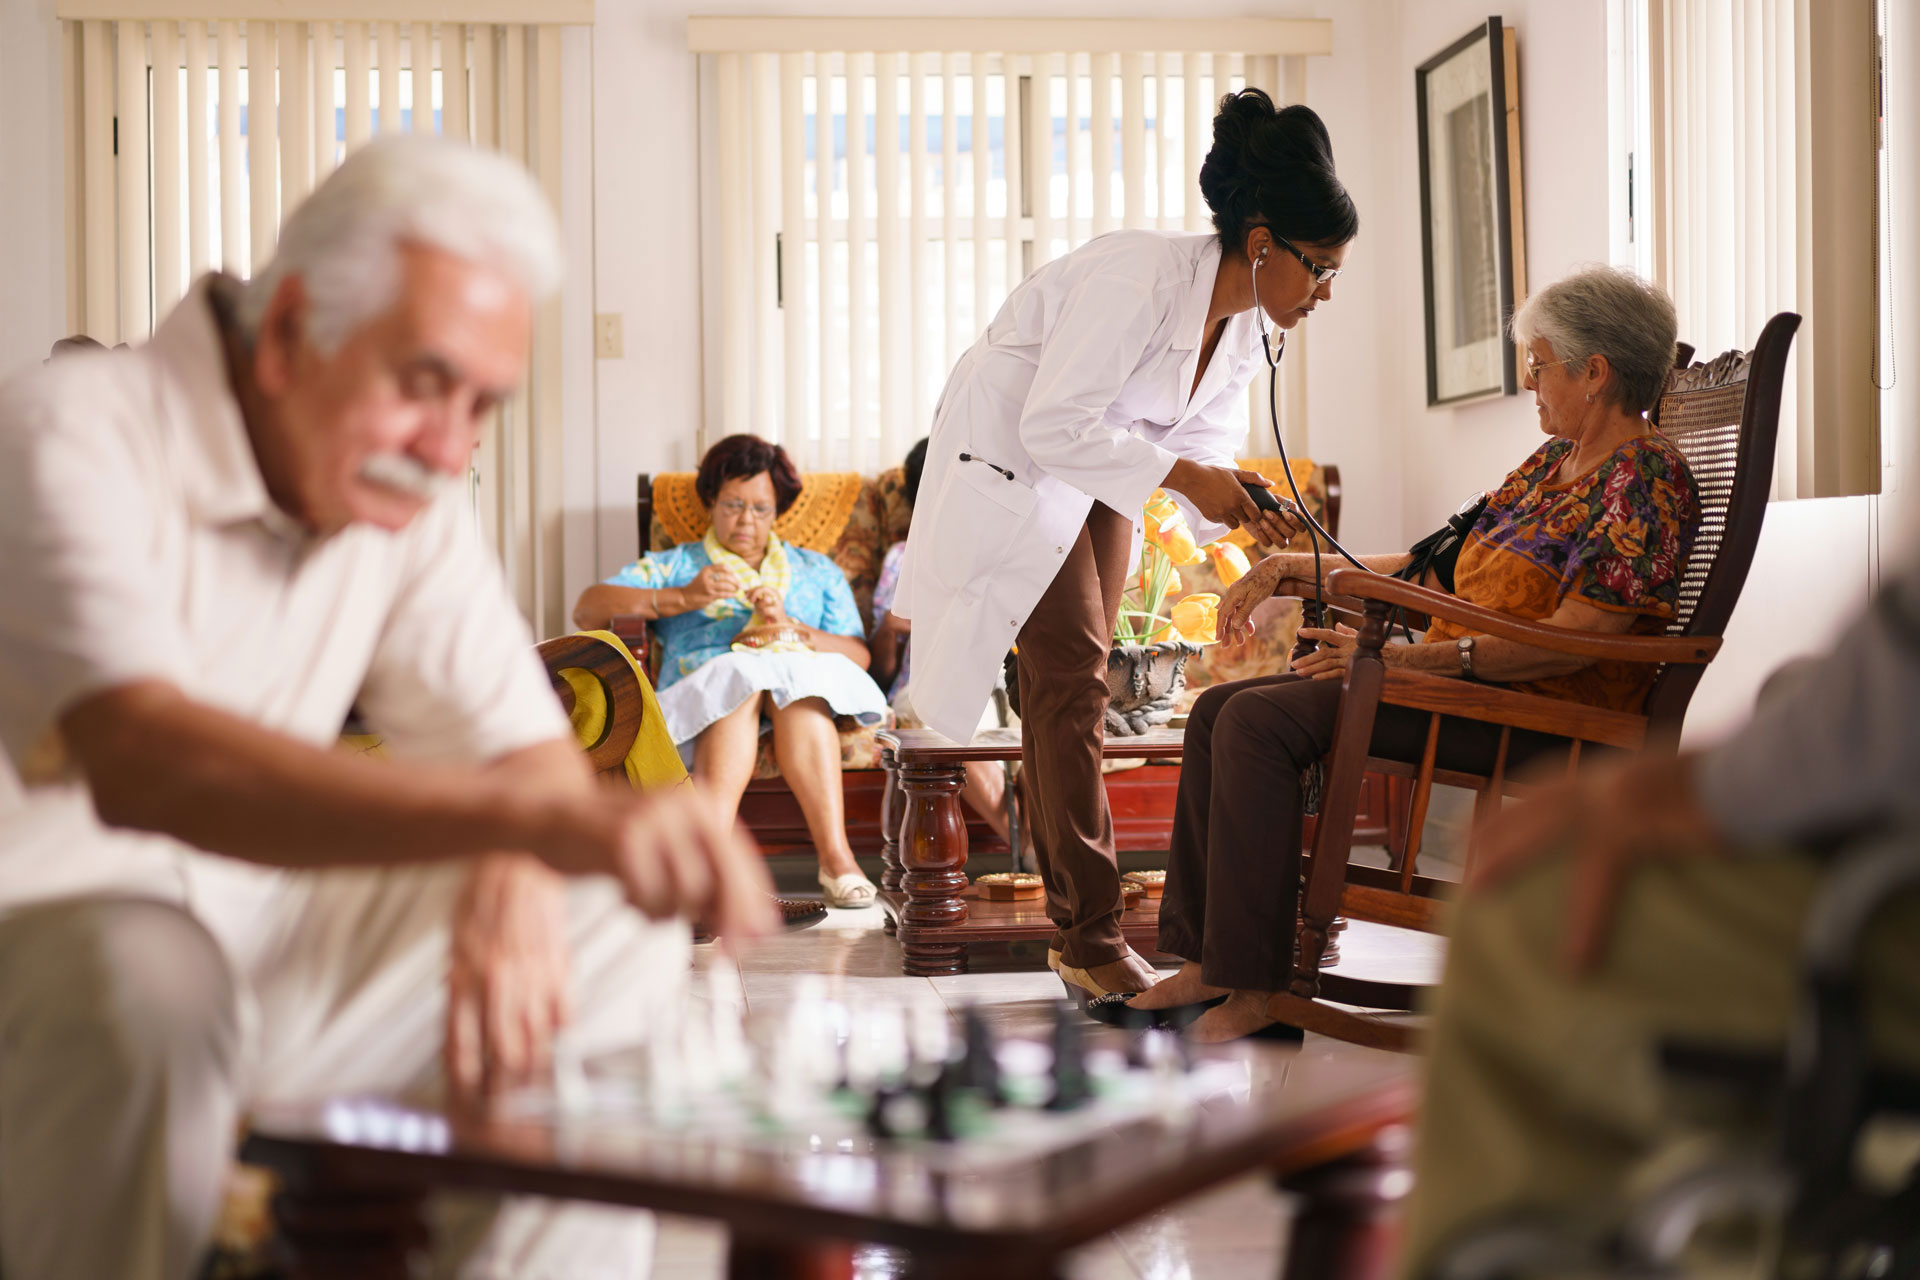 elders day care in madurai, best old age home madurai